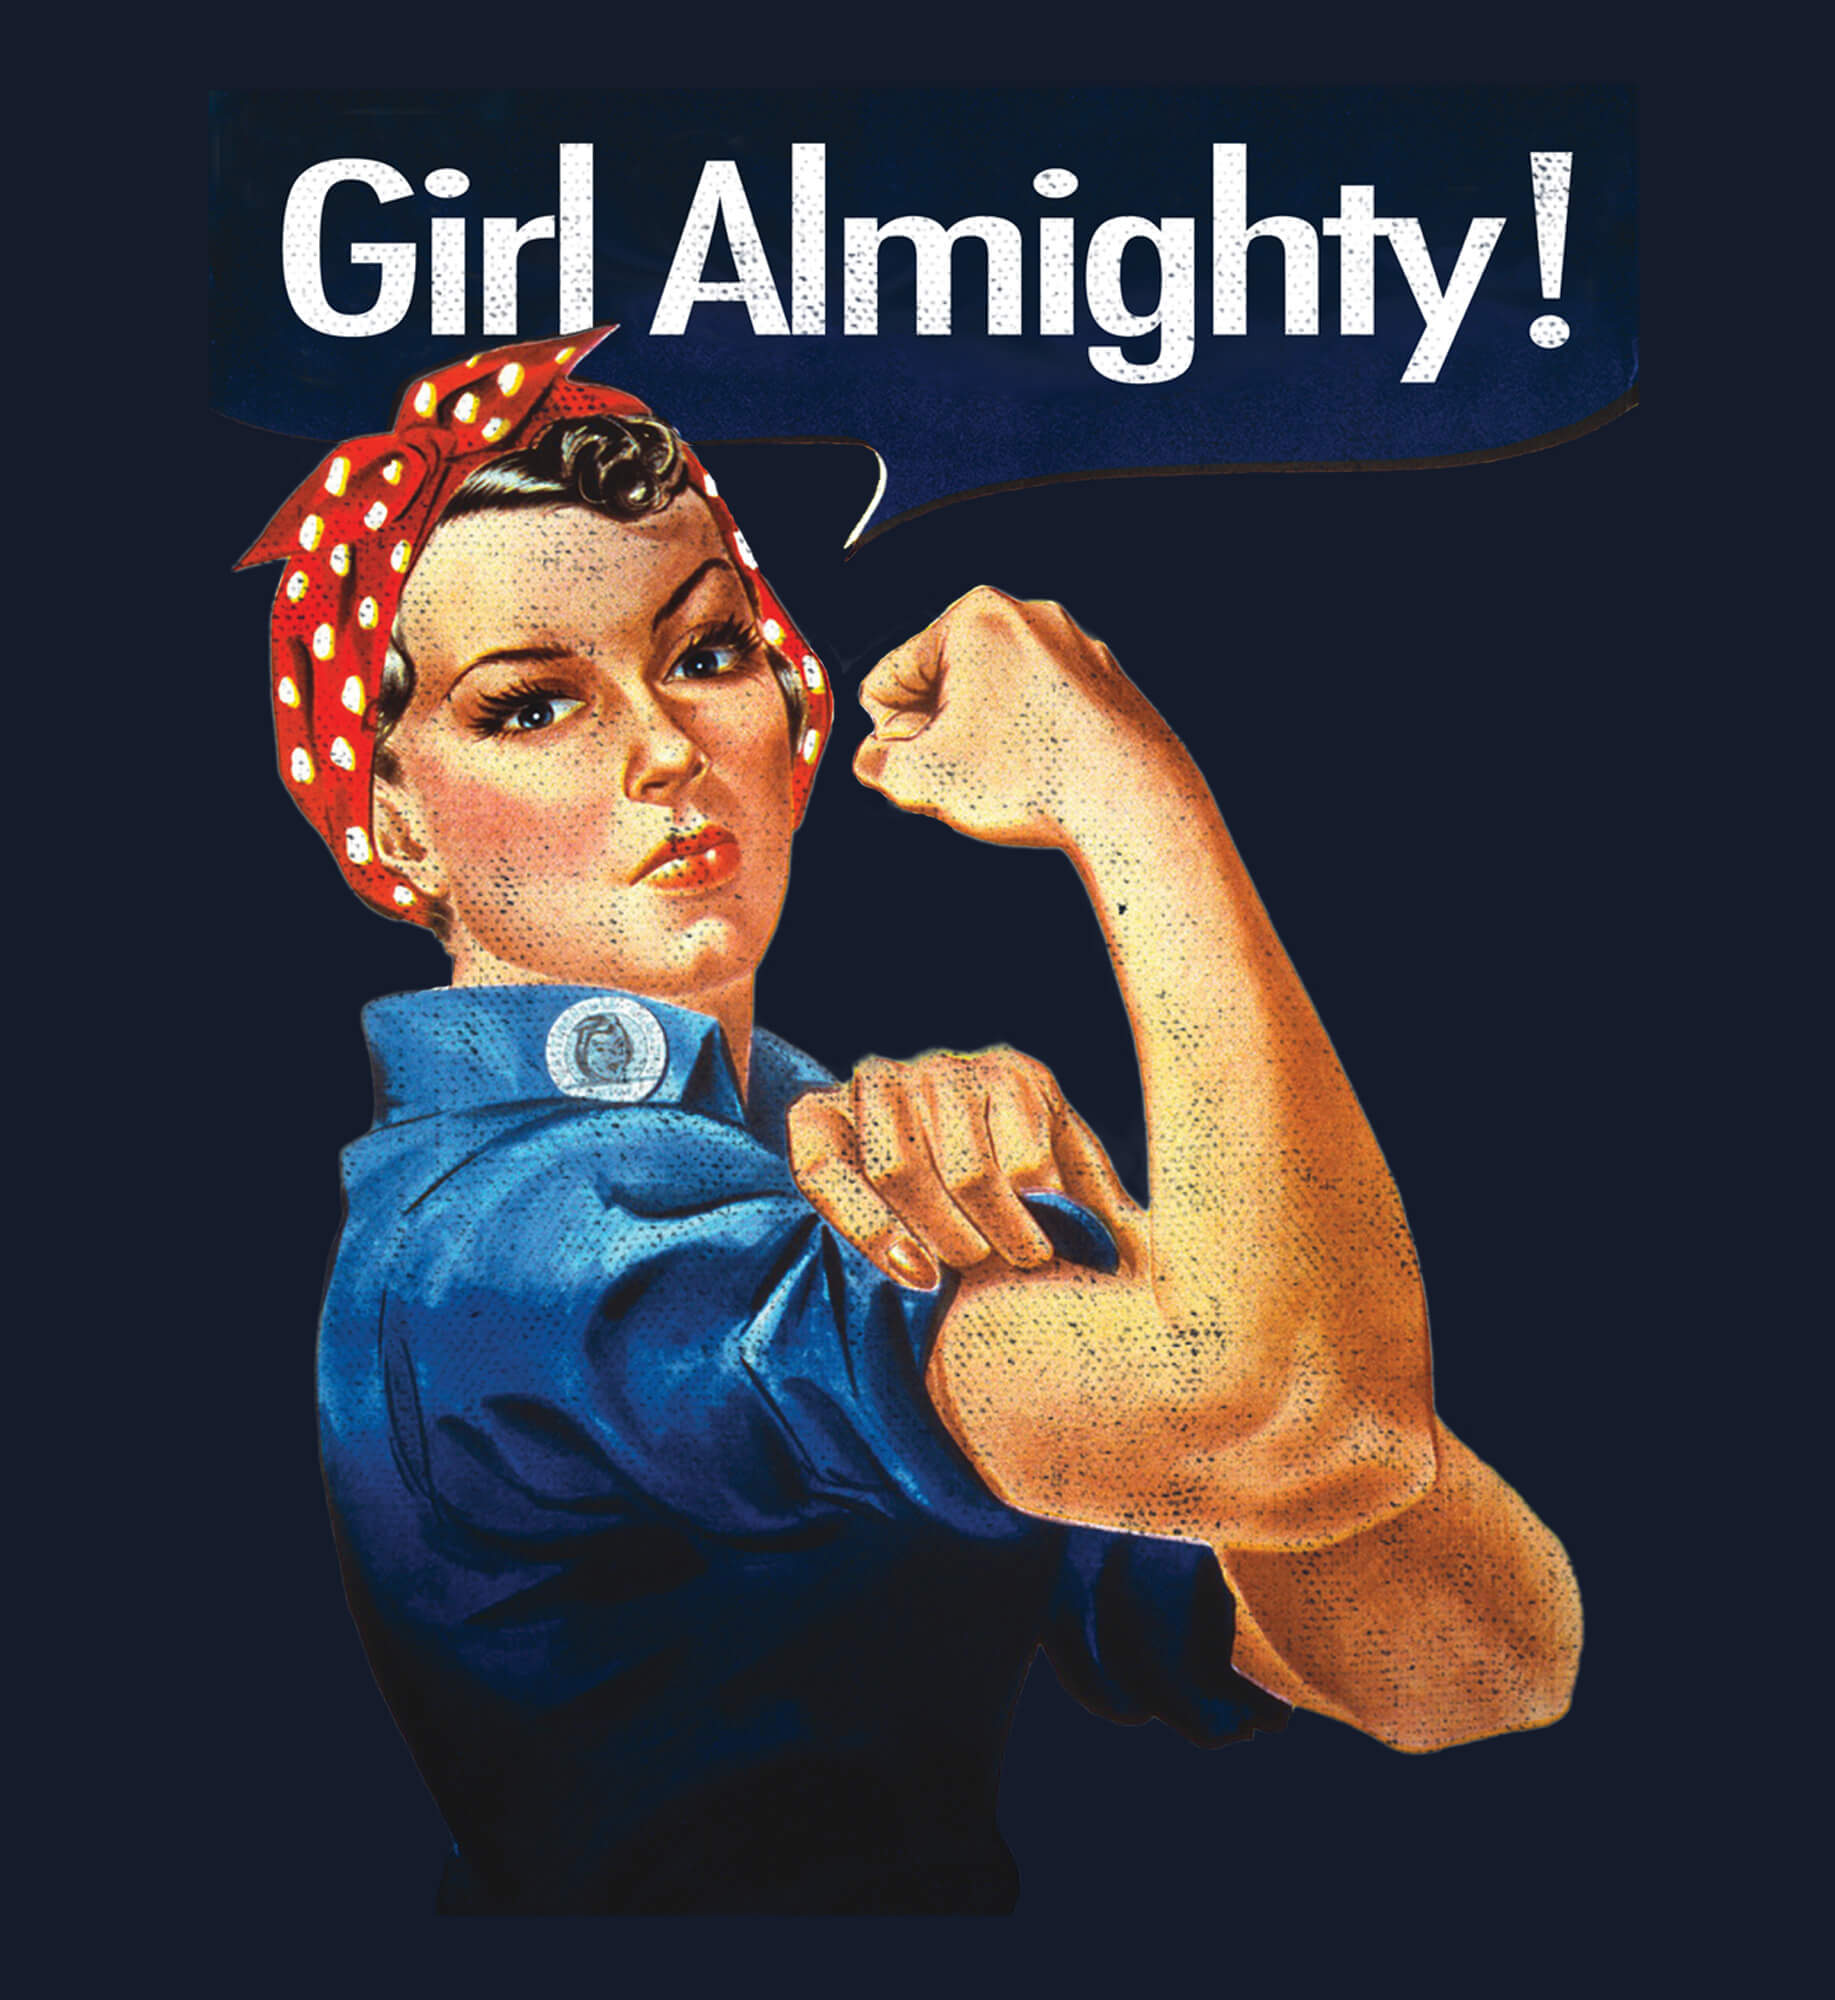 Girl Almighty | whoisCH!CK